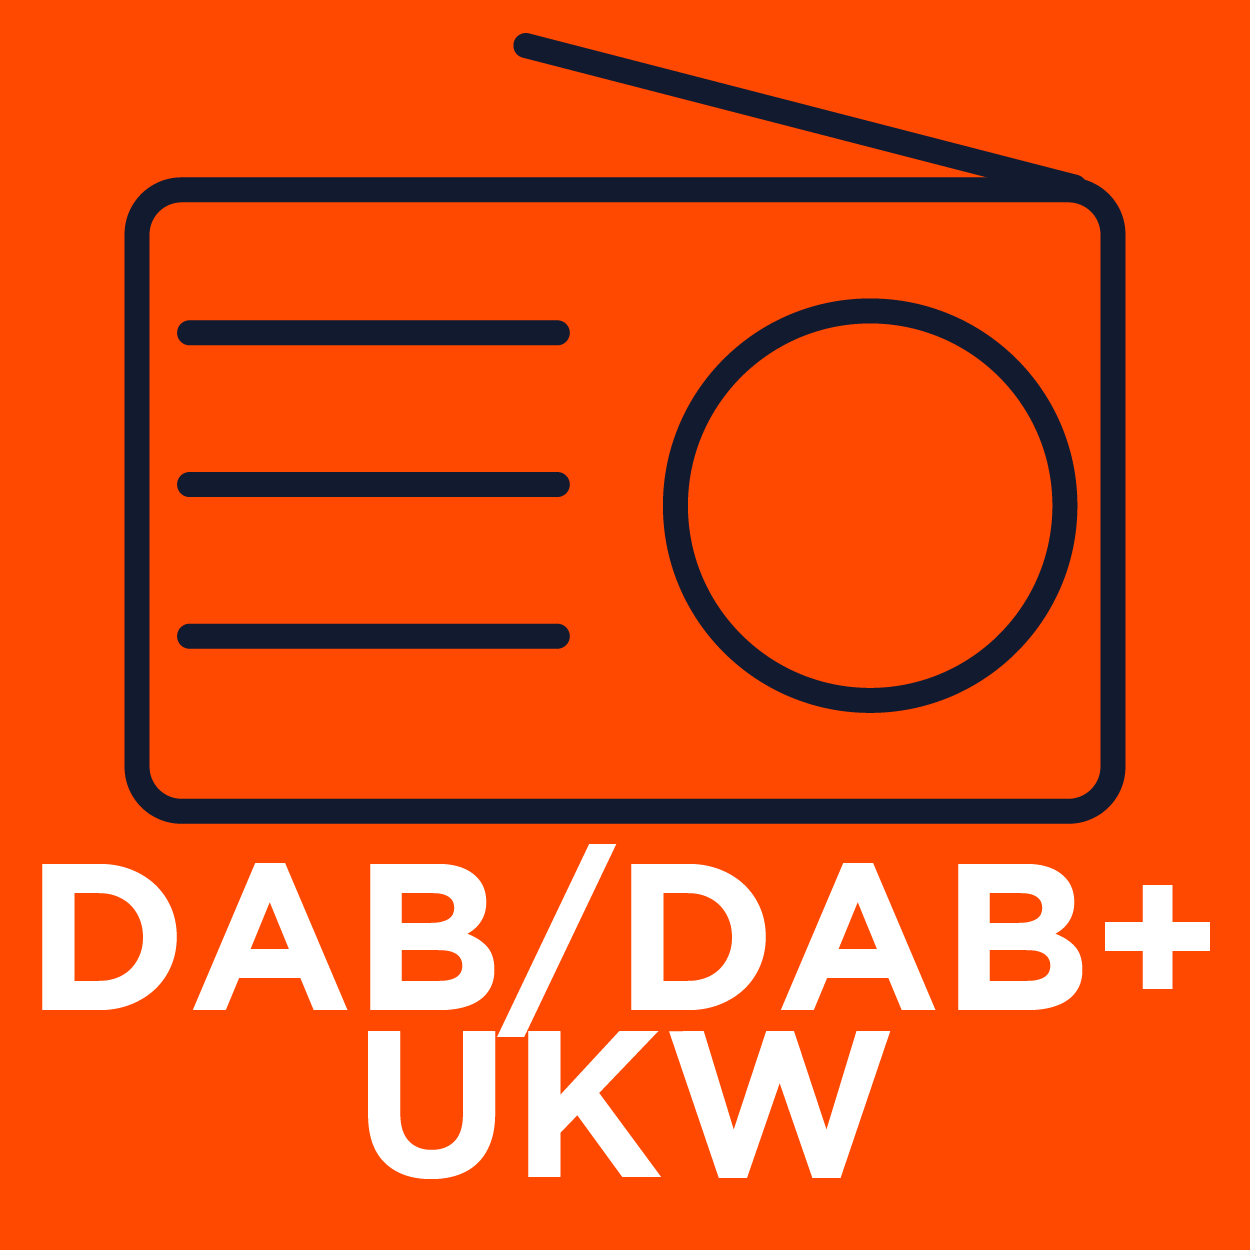 Radio_dab_dabplus_ukw.png